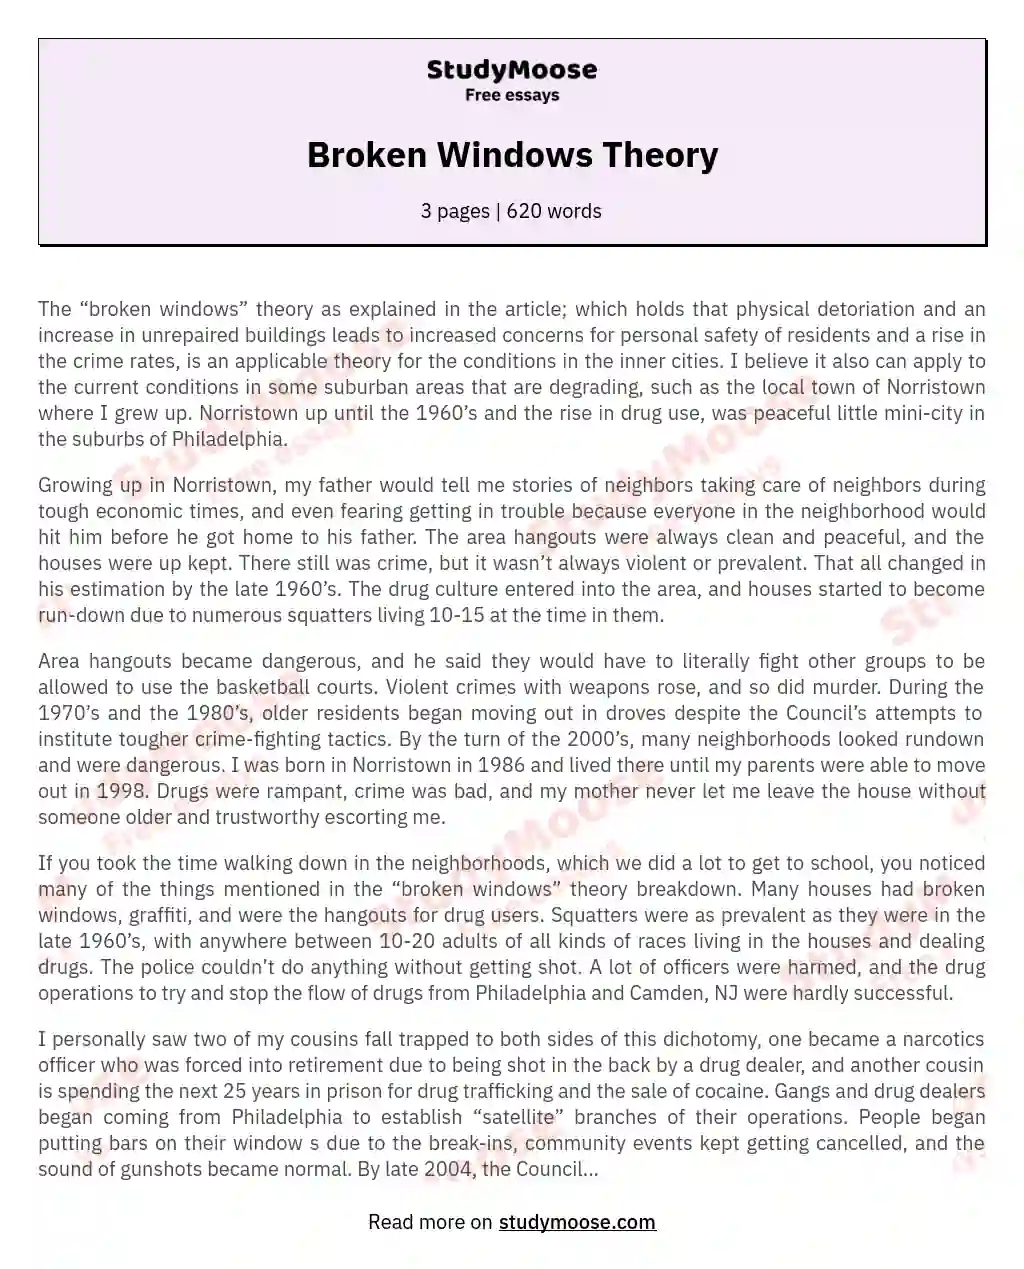 Broken Windows Theory essay